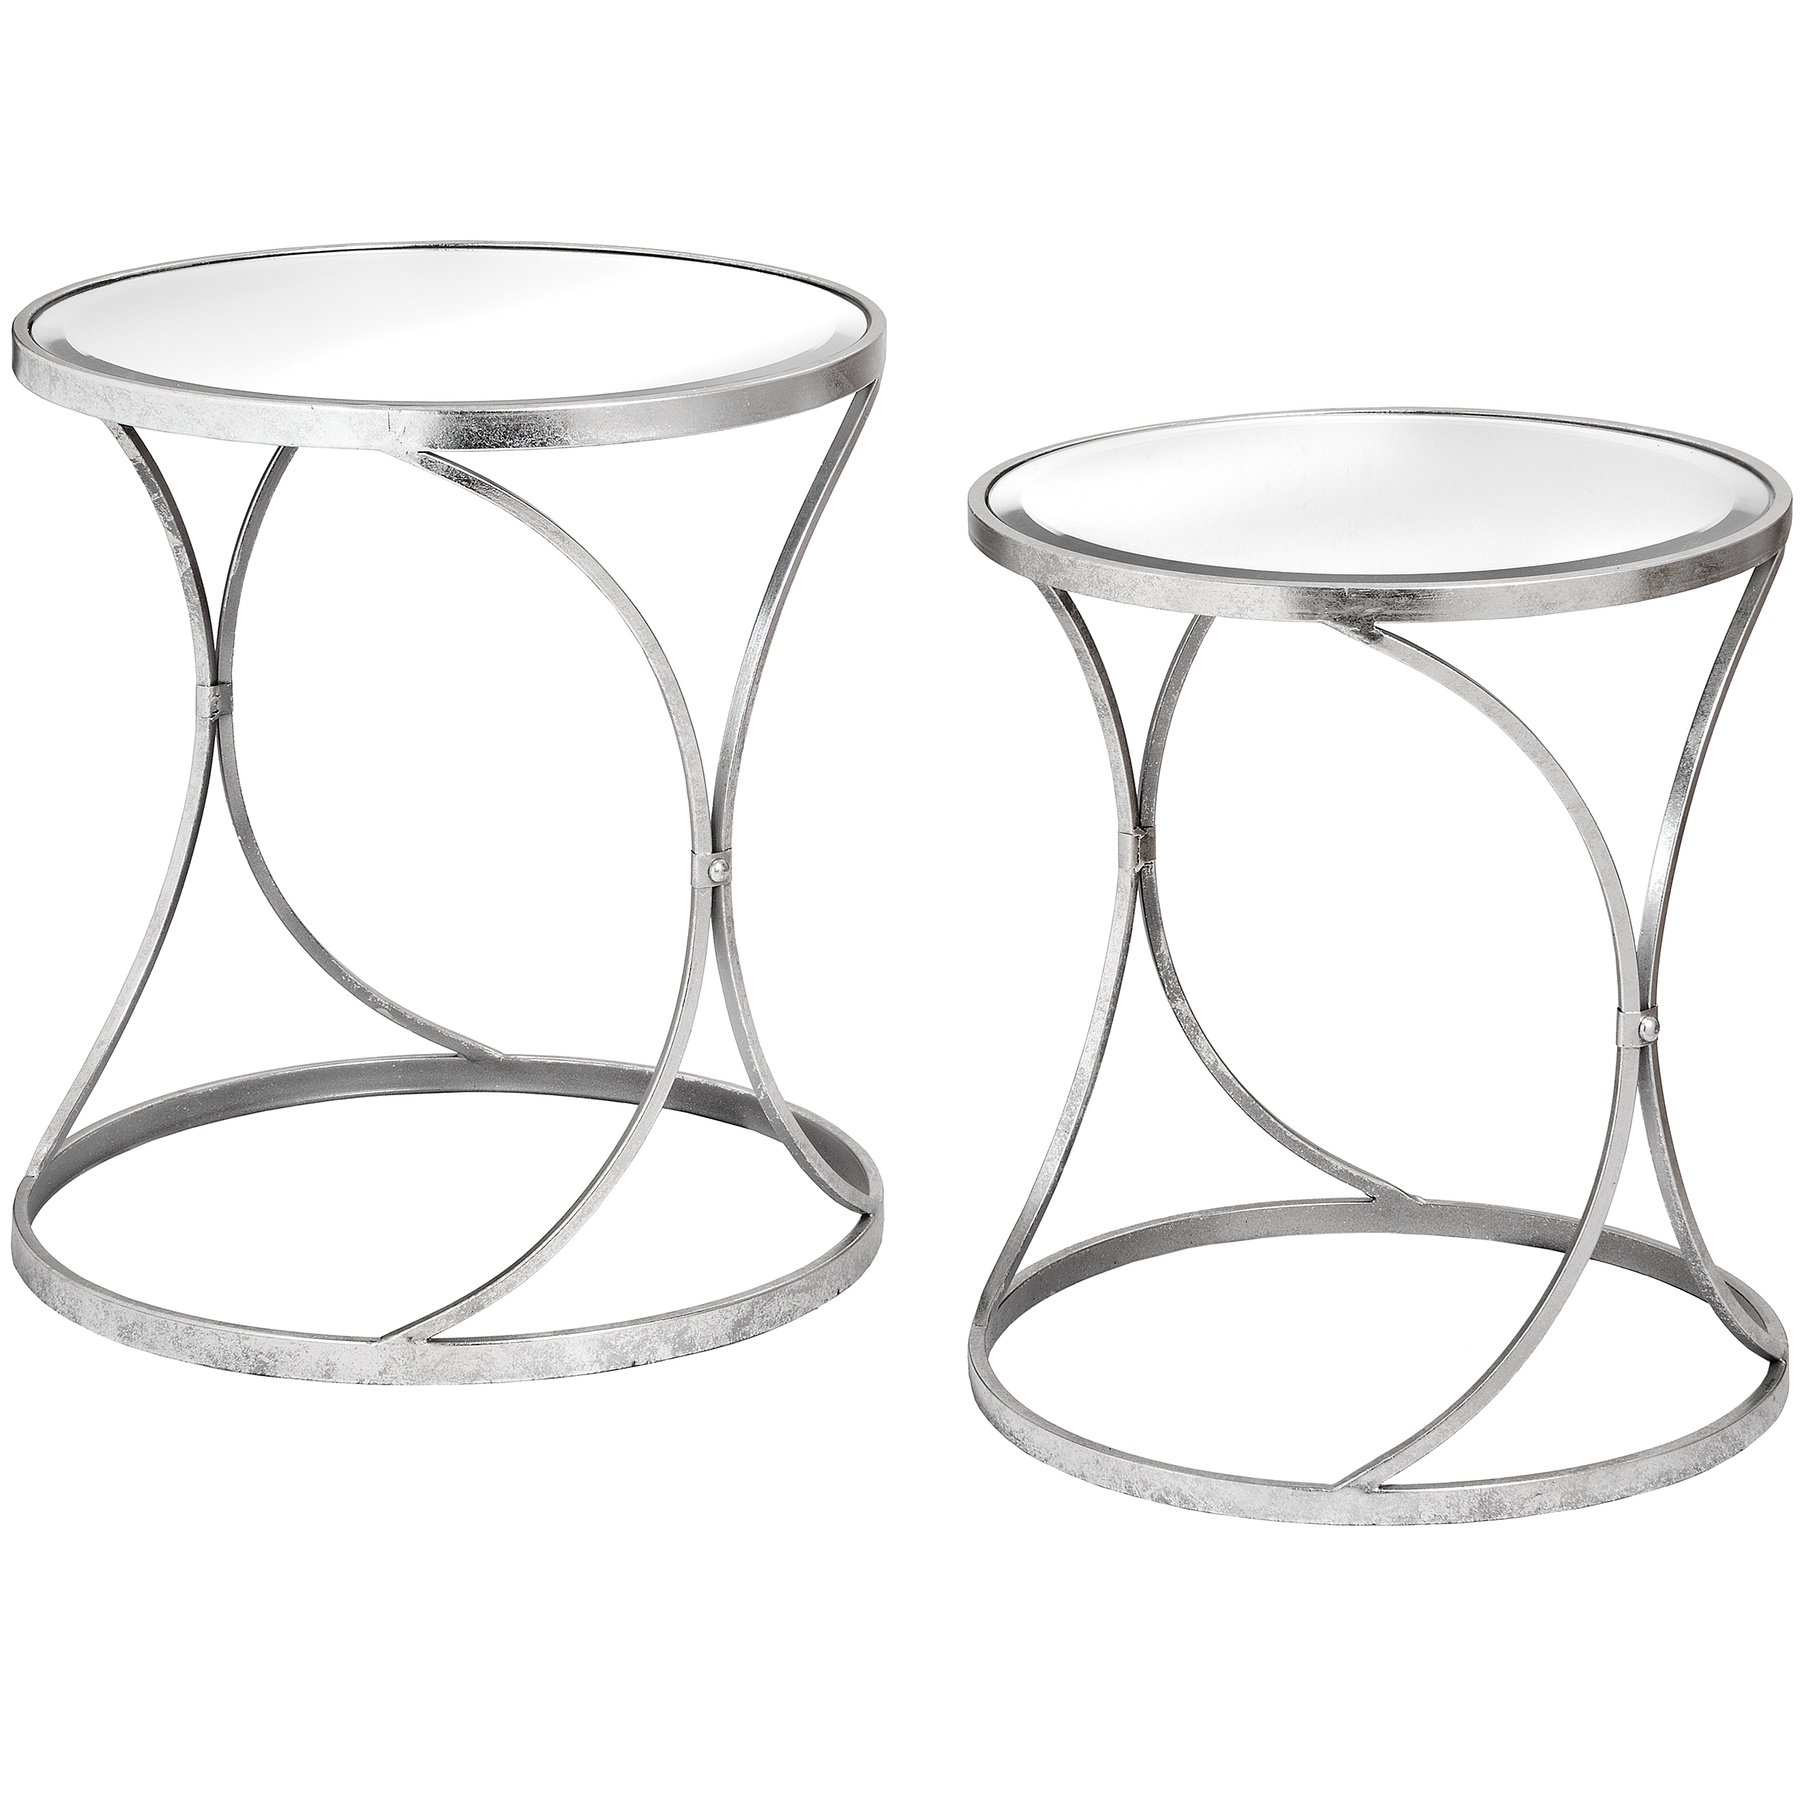 Silver Curved Design Set Of 2 Side Tables - Image 1